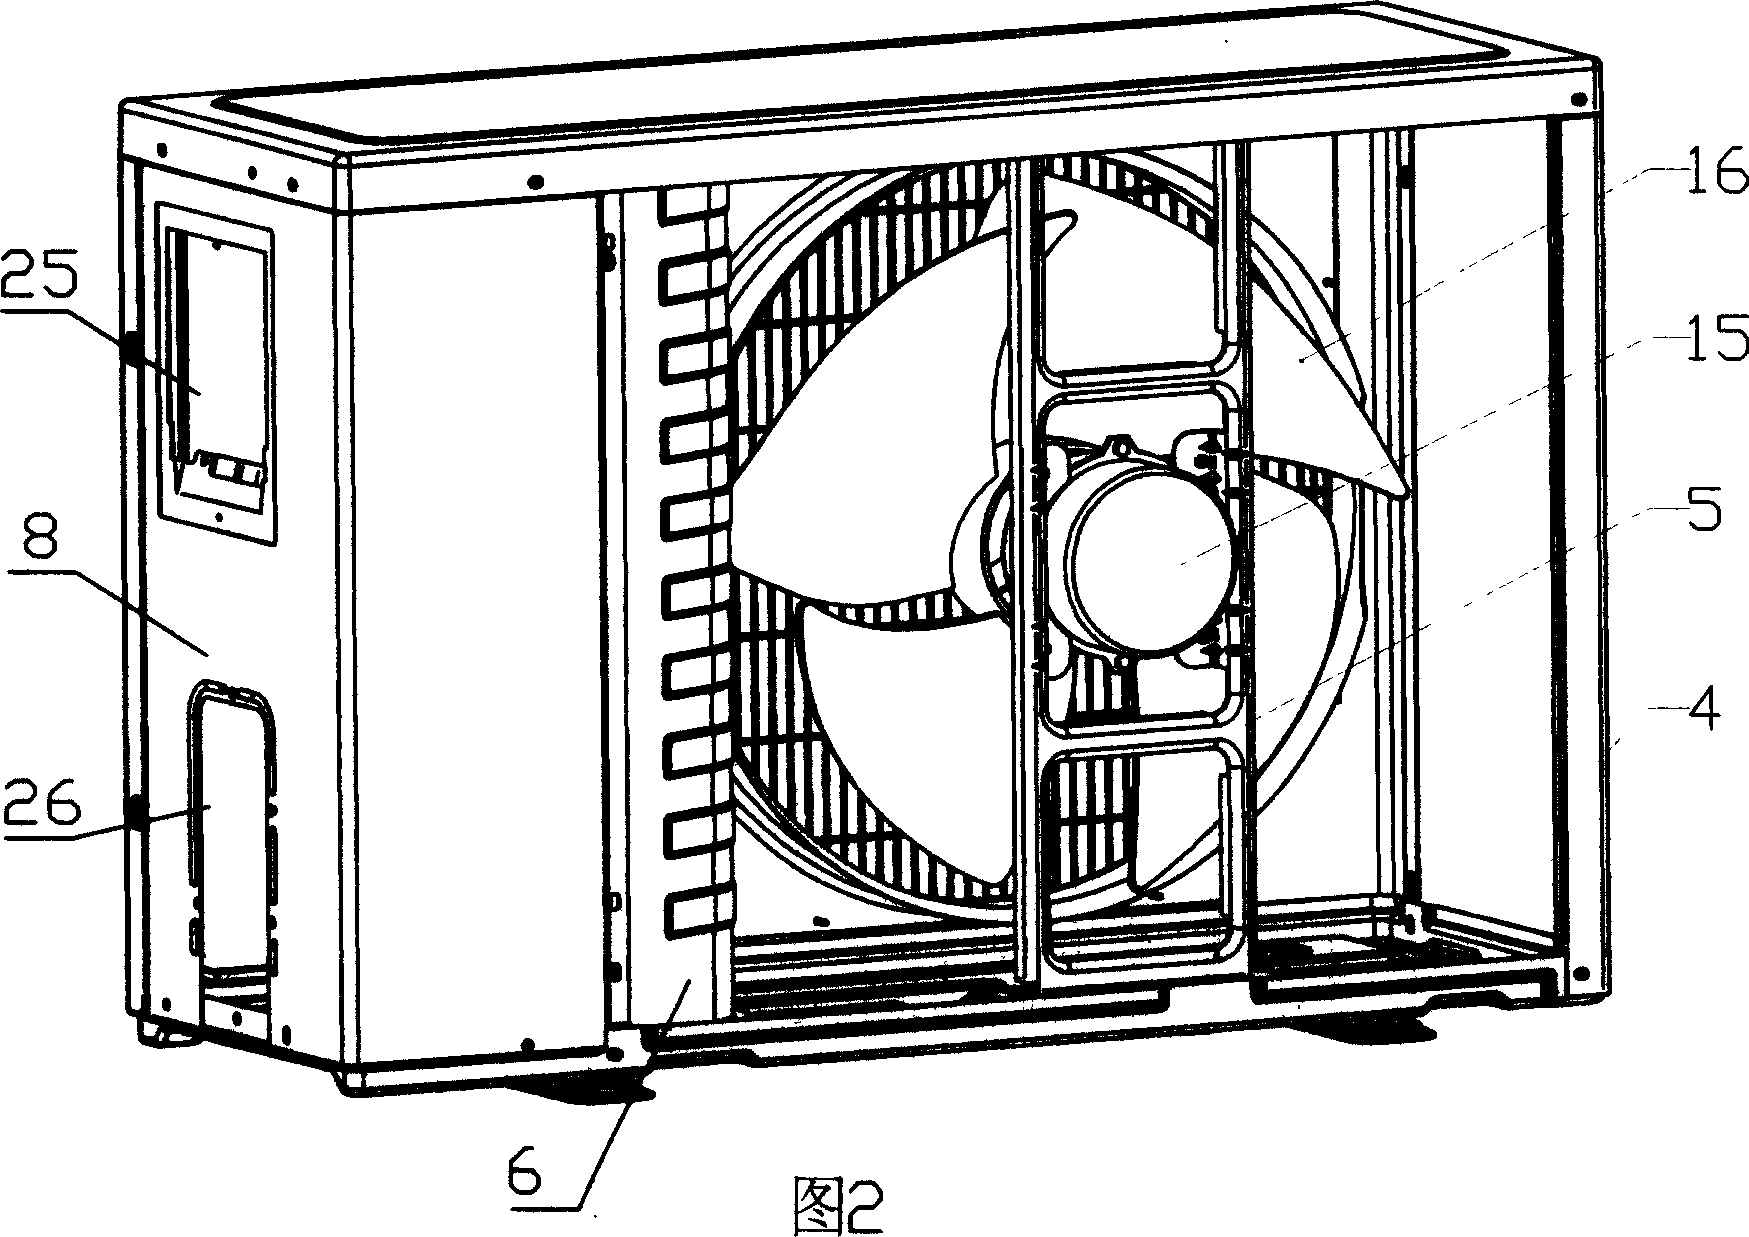 Miniaturized outdoor unit of split type air conditioner